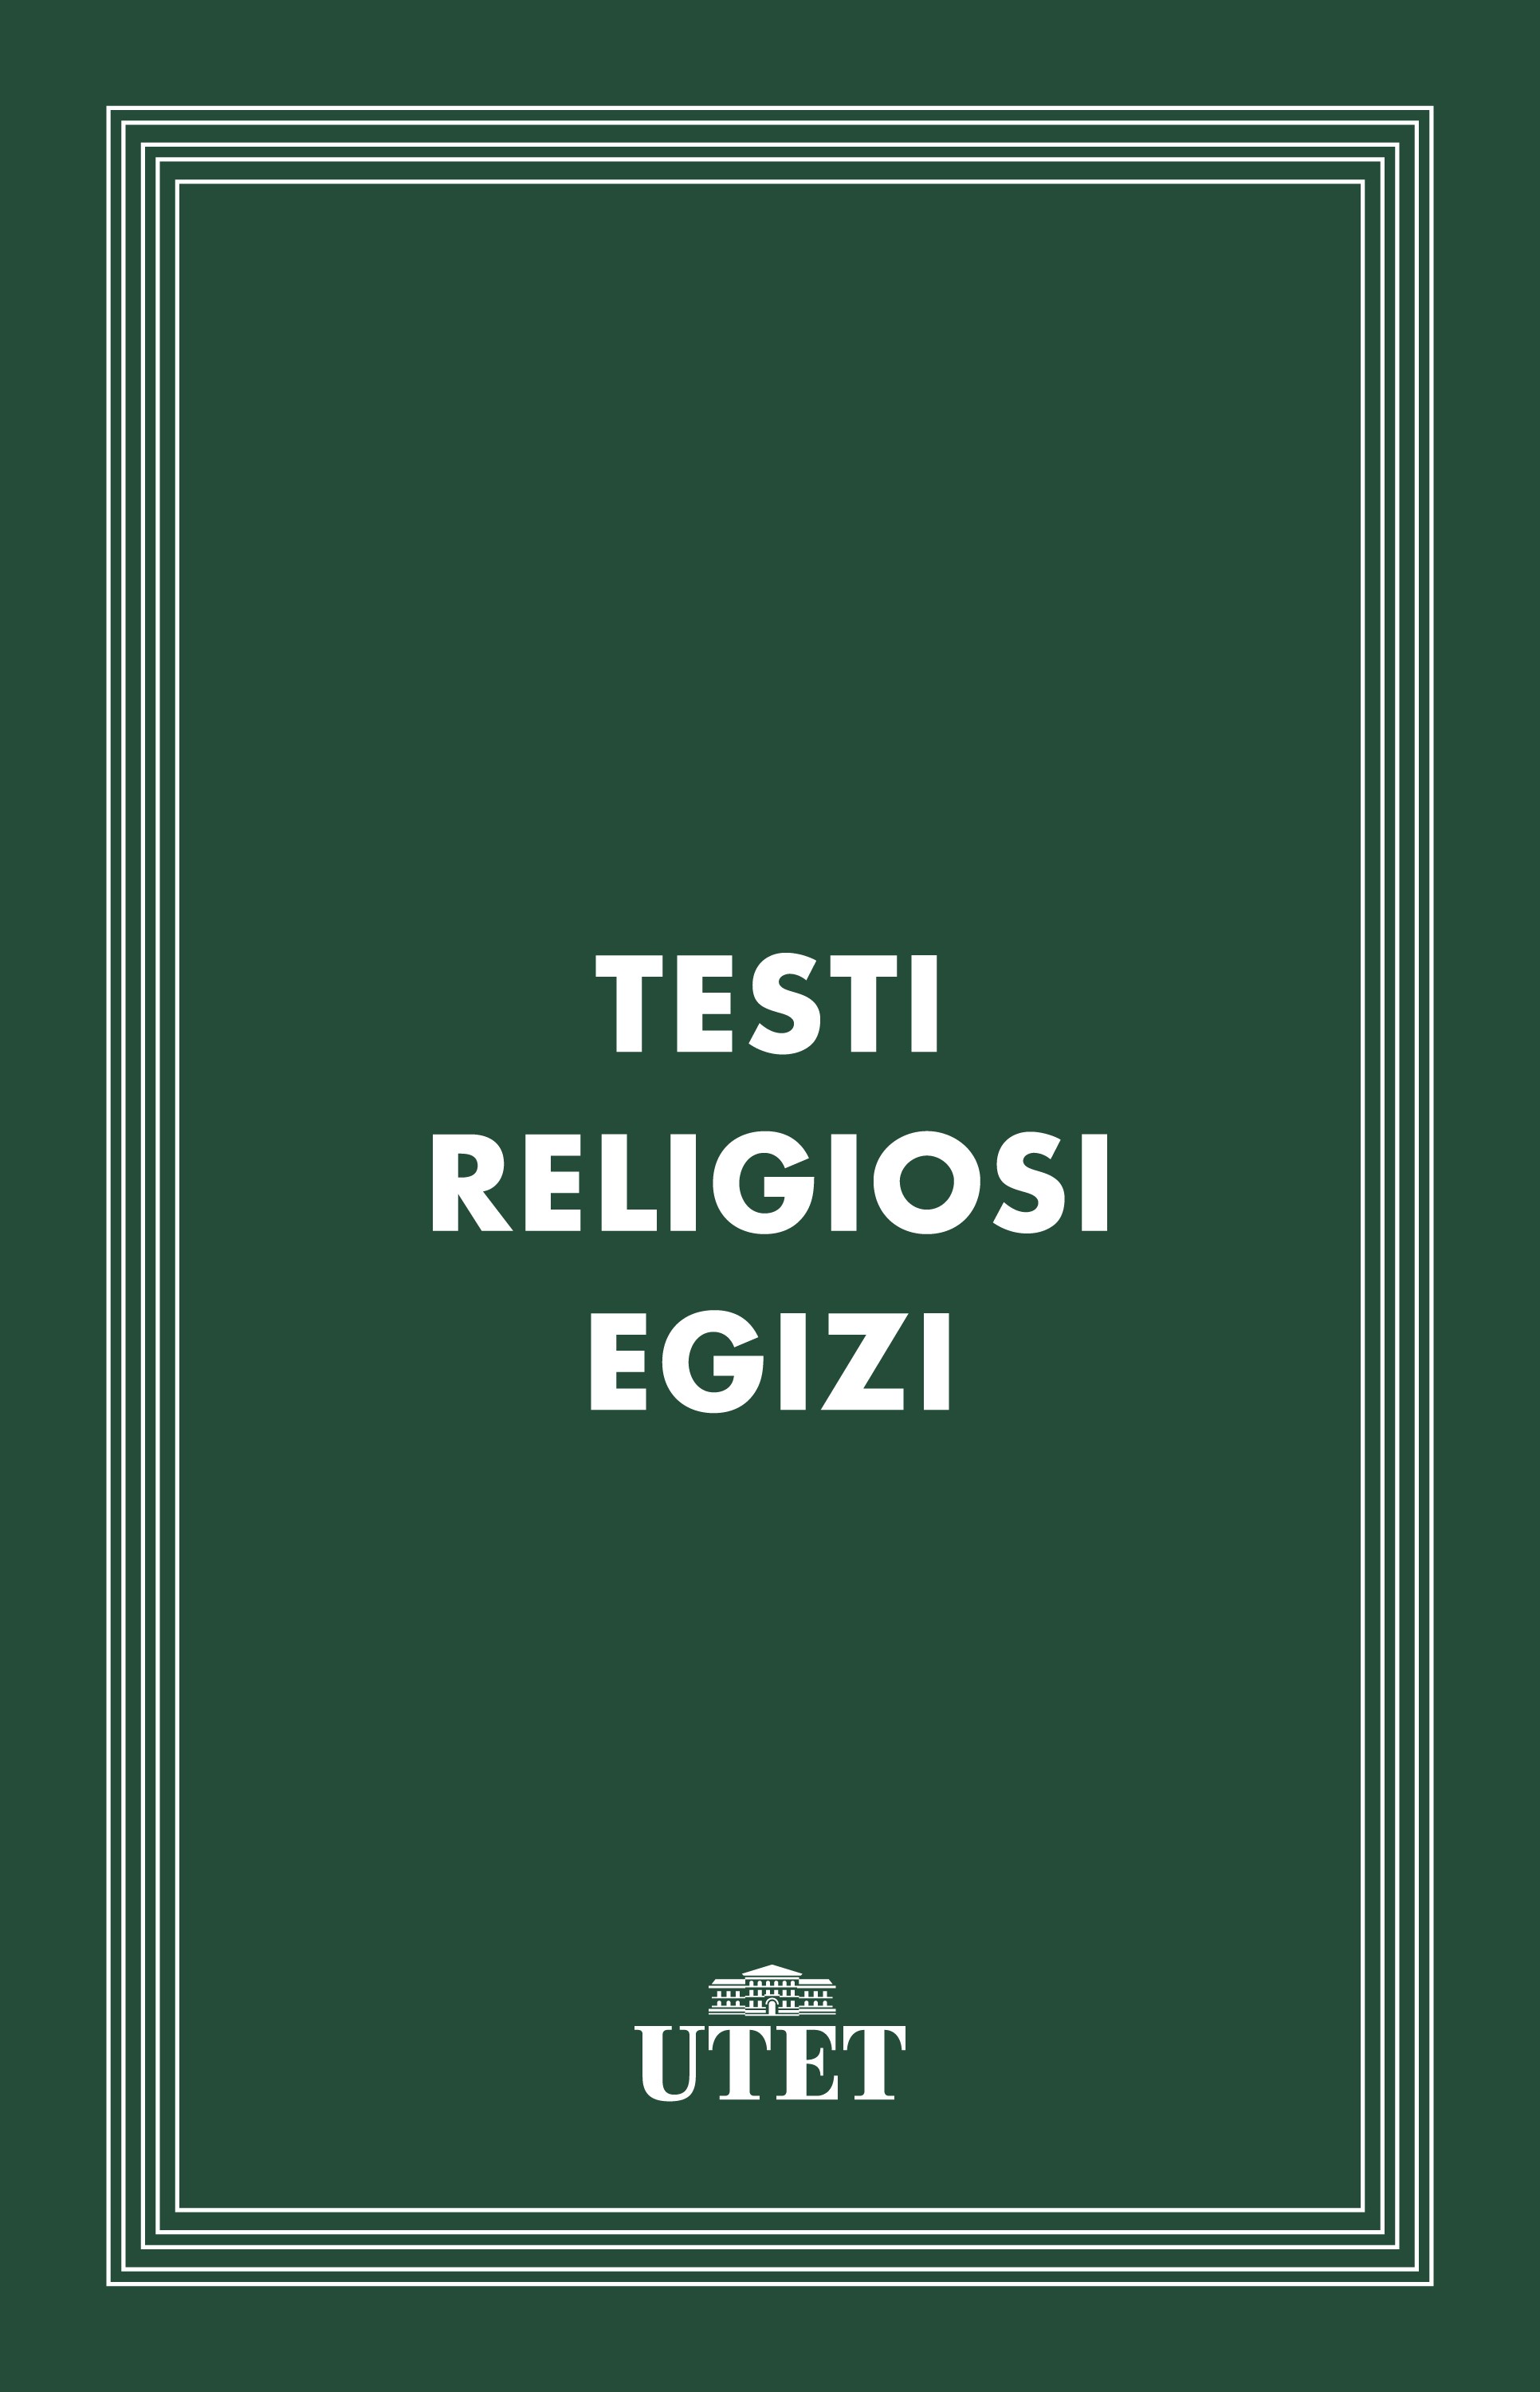 Testi religiosi egizi - Librerie.coop